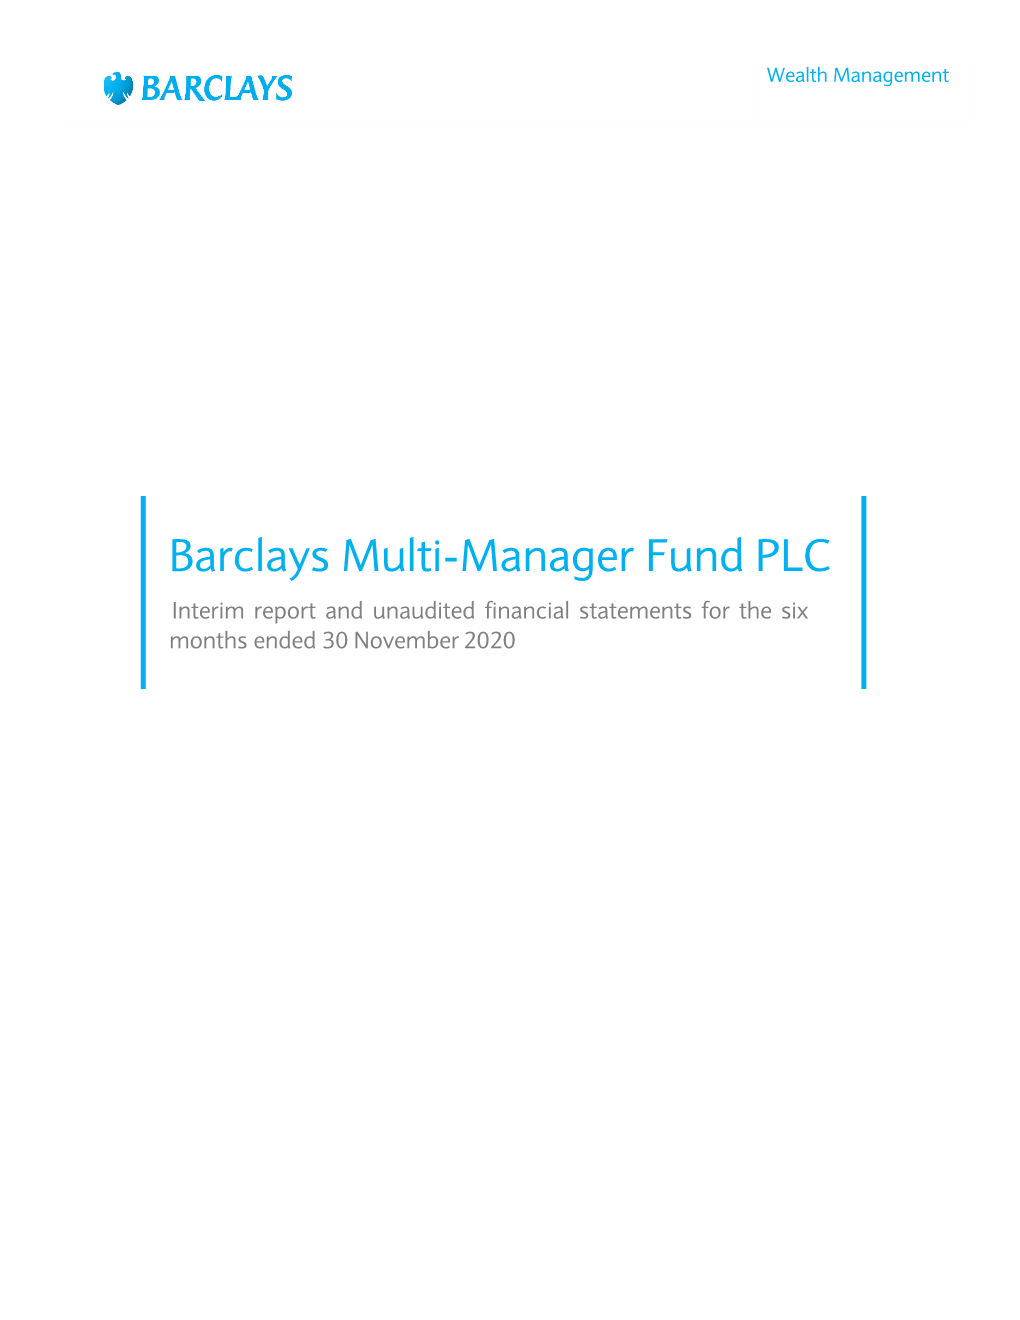 Barclays Multi